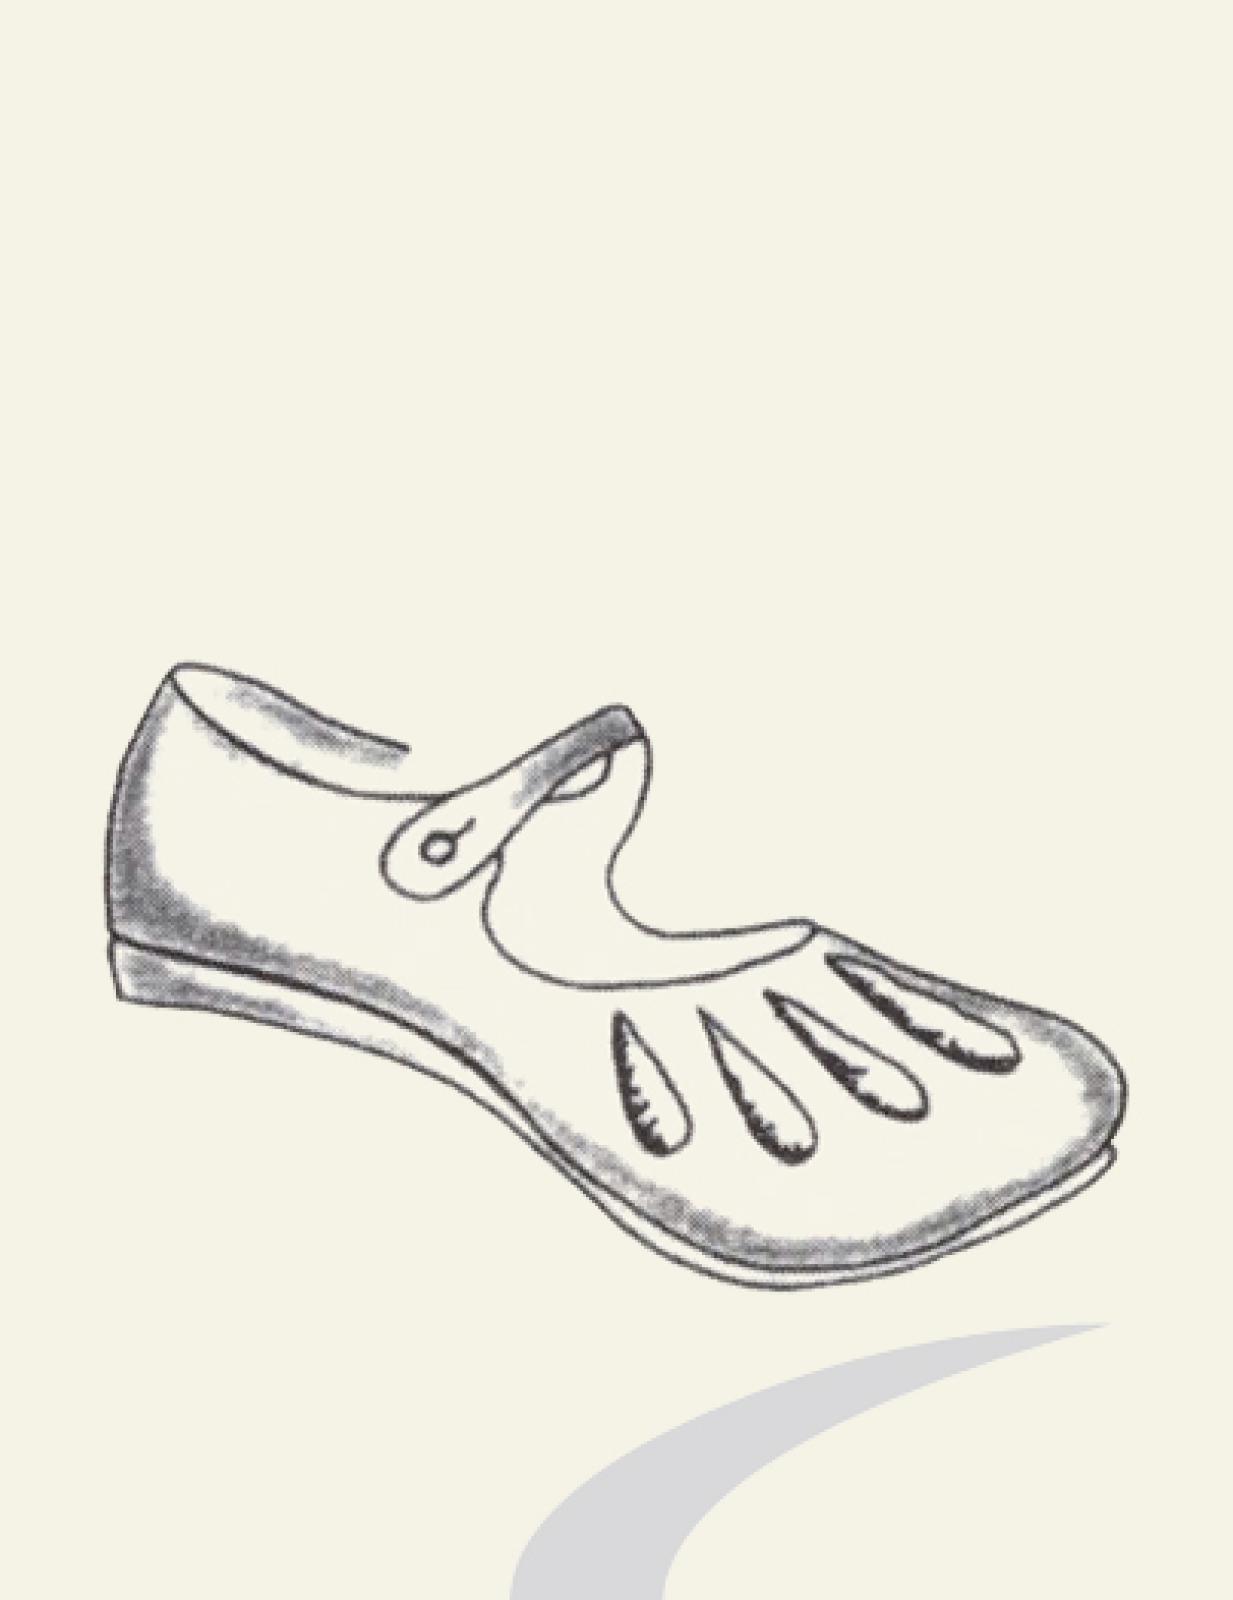 Ristriemen Tudor-Schuh